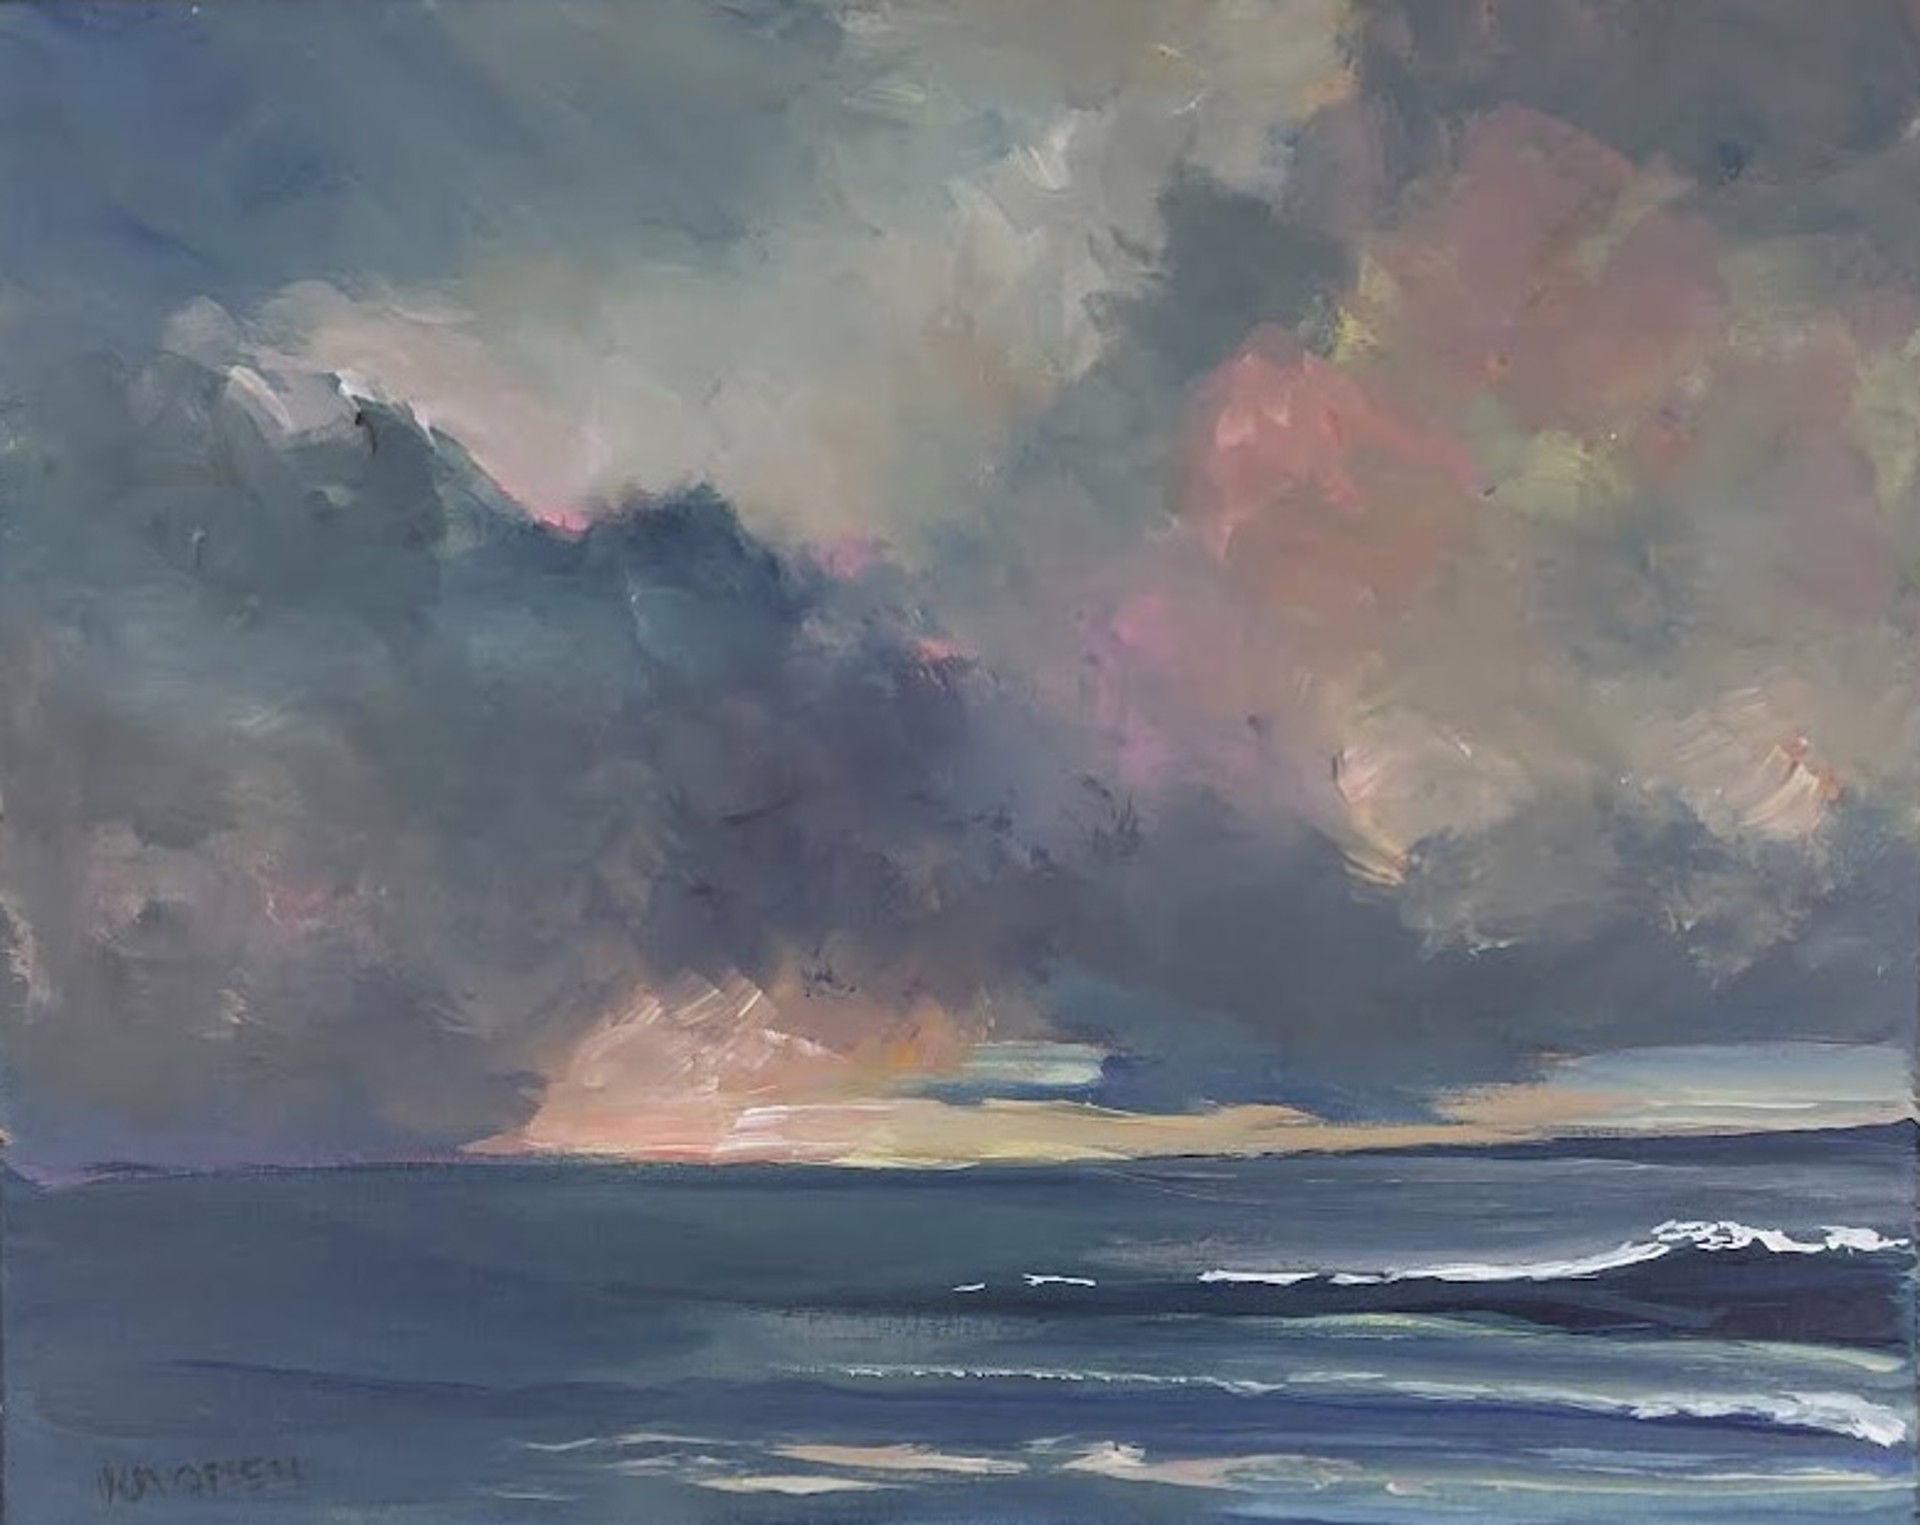 Storm off Shore by Peter Juvonen